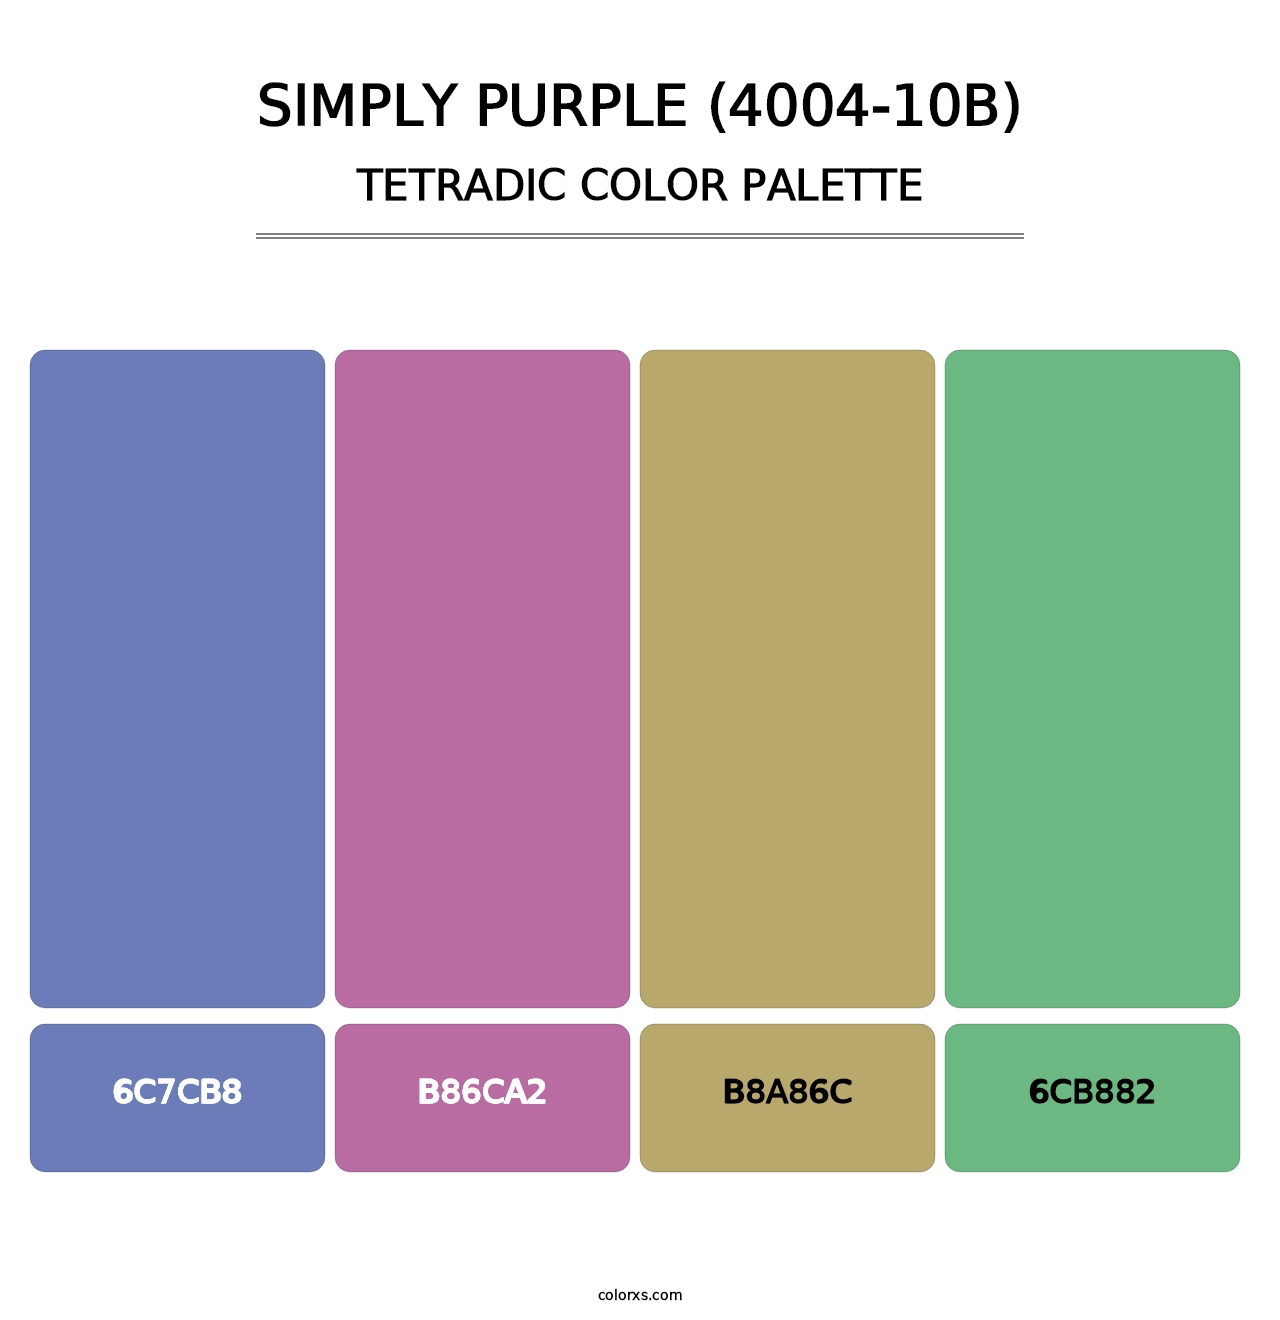 Simply Purple (4004-10B) - Tetradic Color Palette